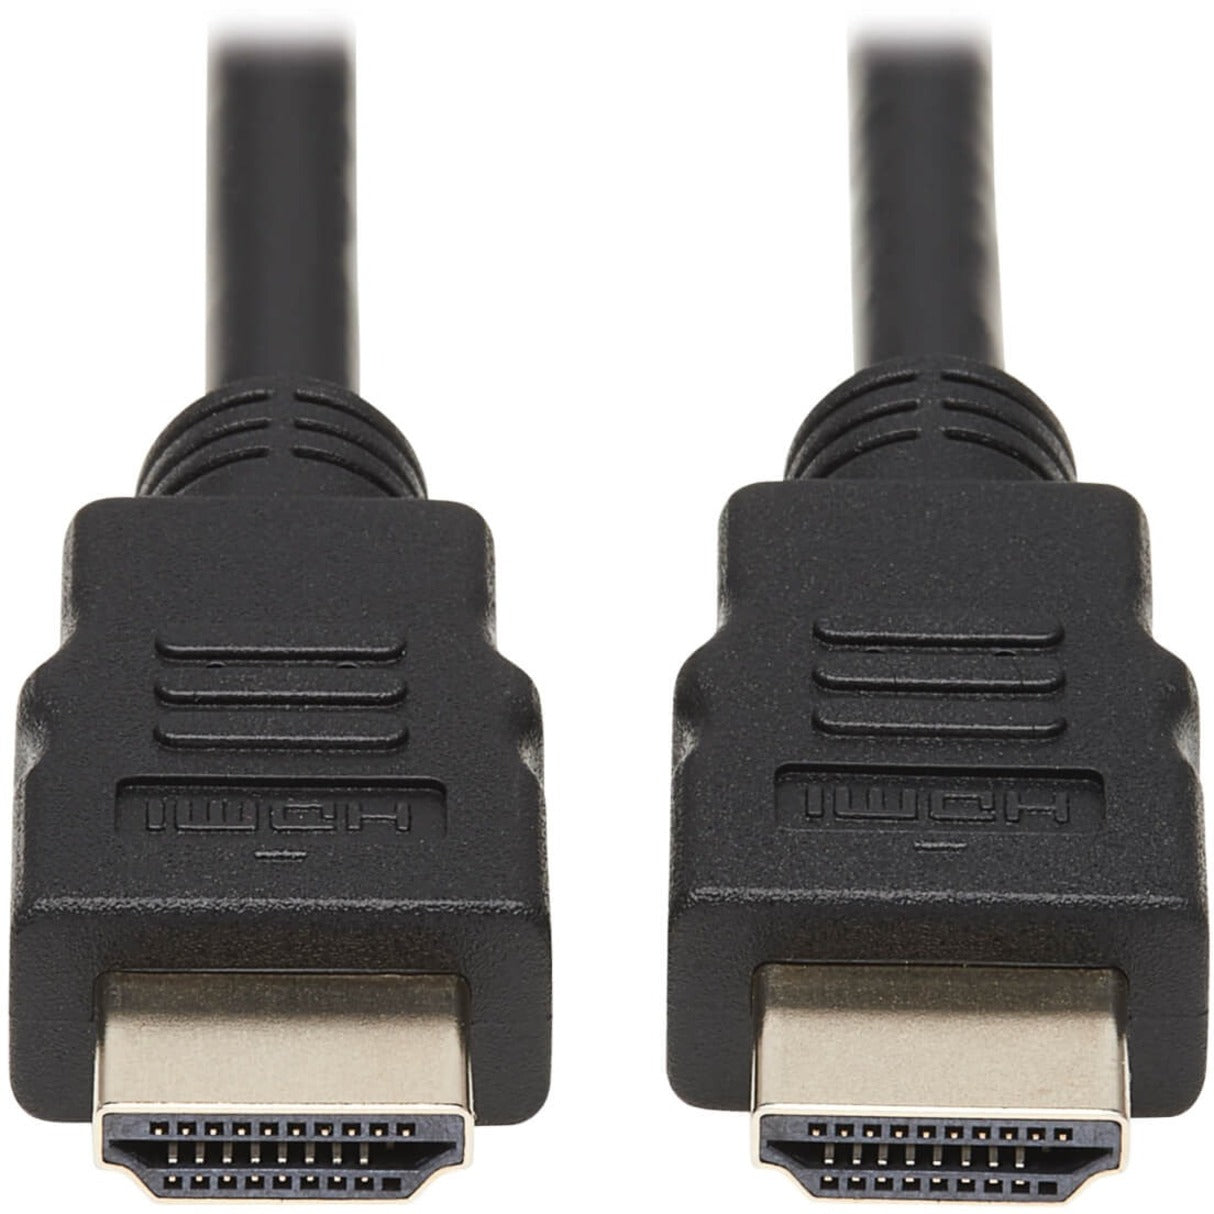 Tripp Lite P569-010 高速 HDMI 线缆带以太网，10 英尺，成型，镀金 品牌名称：Tripp Lite 翻译品牌名称：赛普莱特